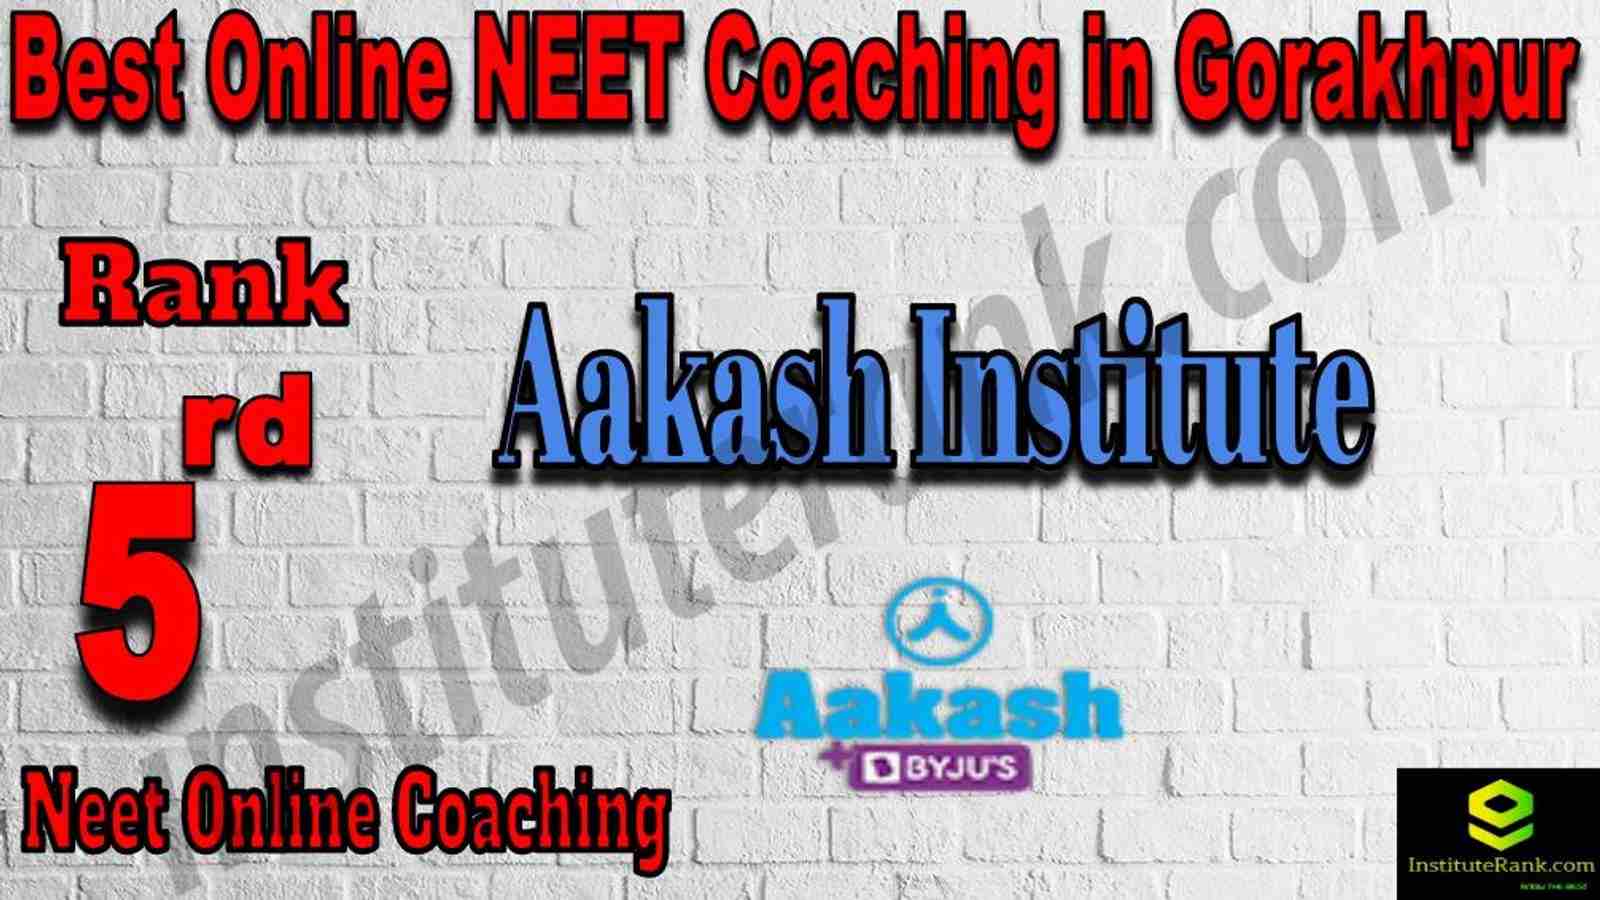 5th Best Online Neet Coaching in Gorakhpur